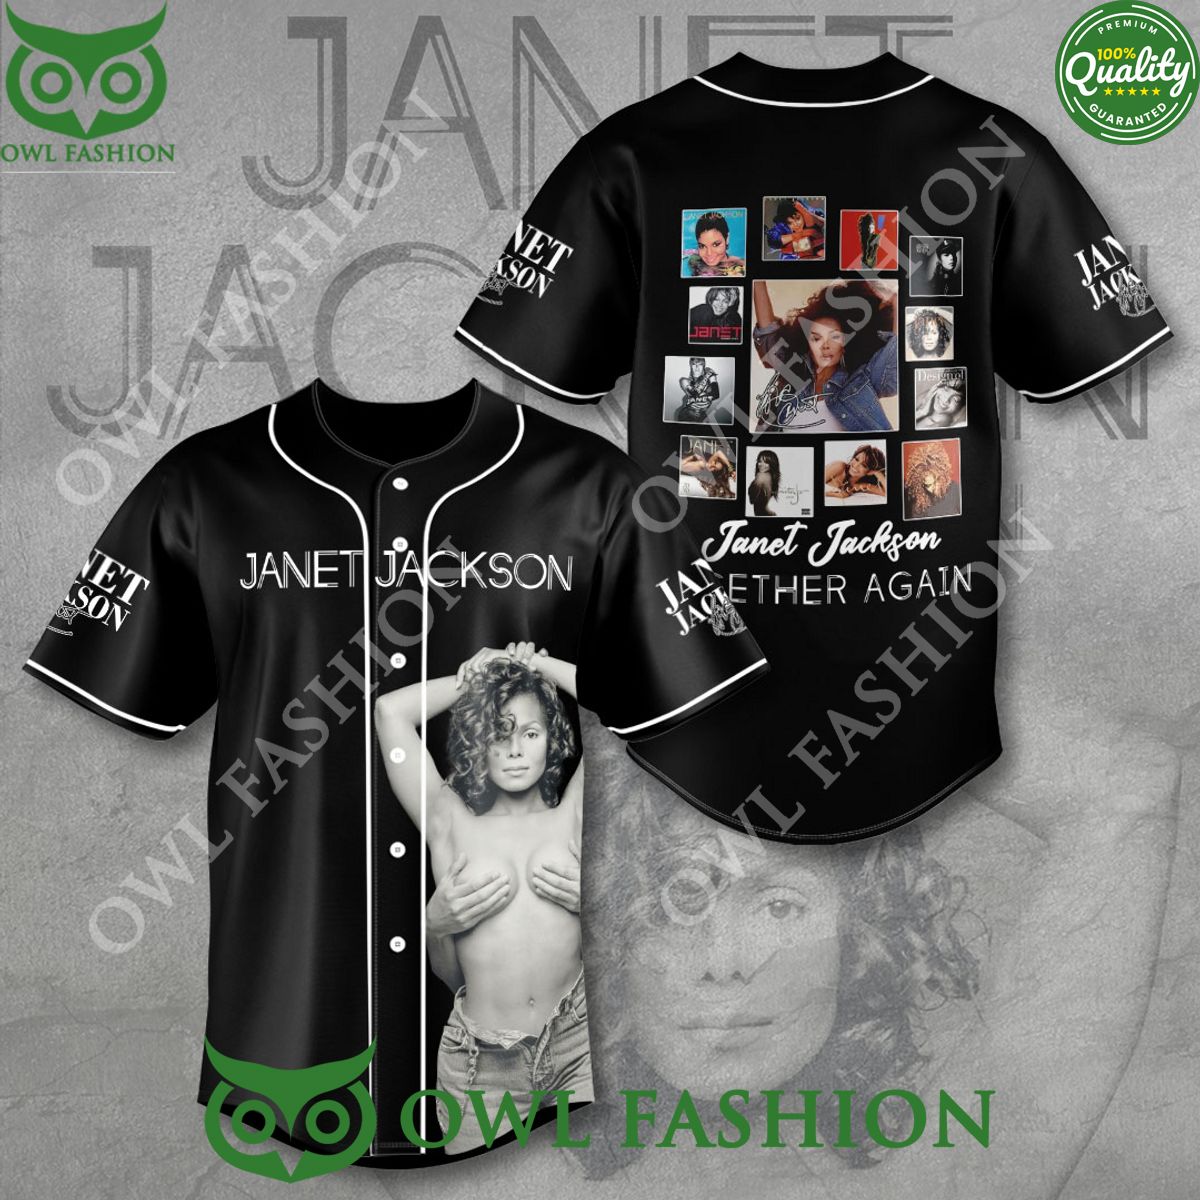 janet jackson queen of pop black baseball jersey 1 mgUwA.jpg